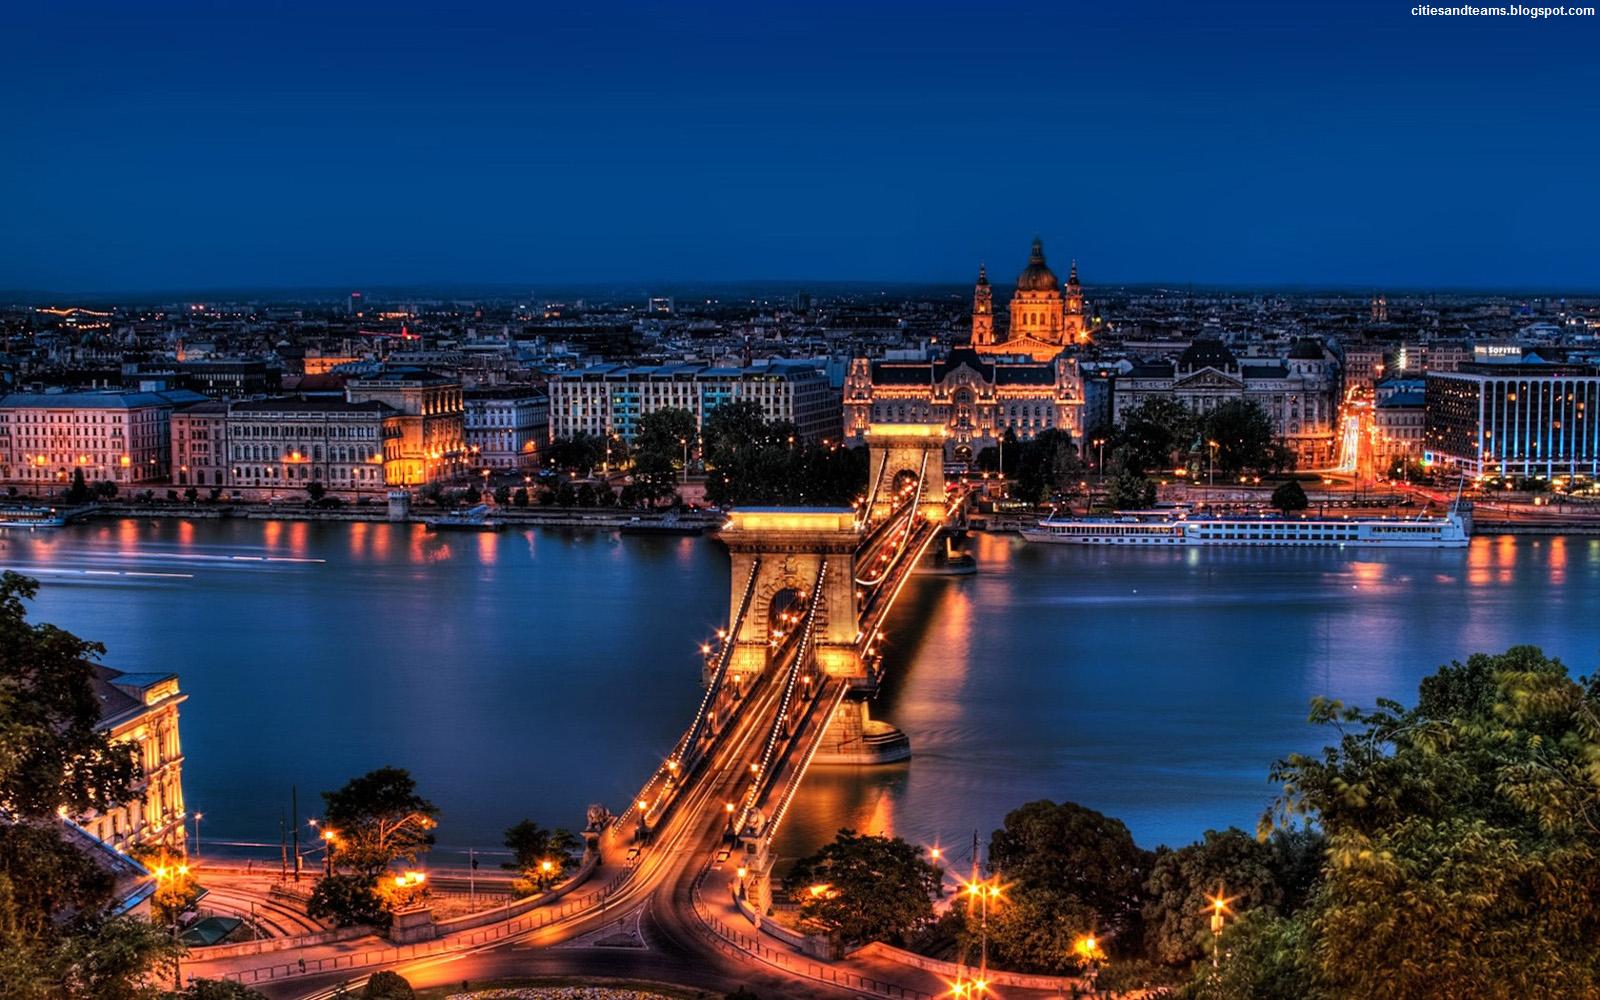 http://3.bp.blogspot.com/-xq7U0shG3Fg/UE5DJjZIfFI/AAAAAAAAHug/uZWgPCxg1Og/s1600/Budapest_Wonderful_Night_Show_Capital_City_Hungary_Hd_Desktop_Wallpaper_citiesandteams.blogspot.com.jpeg